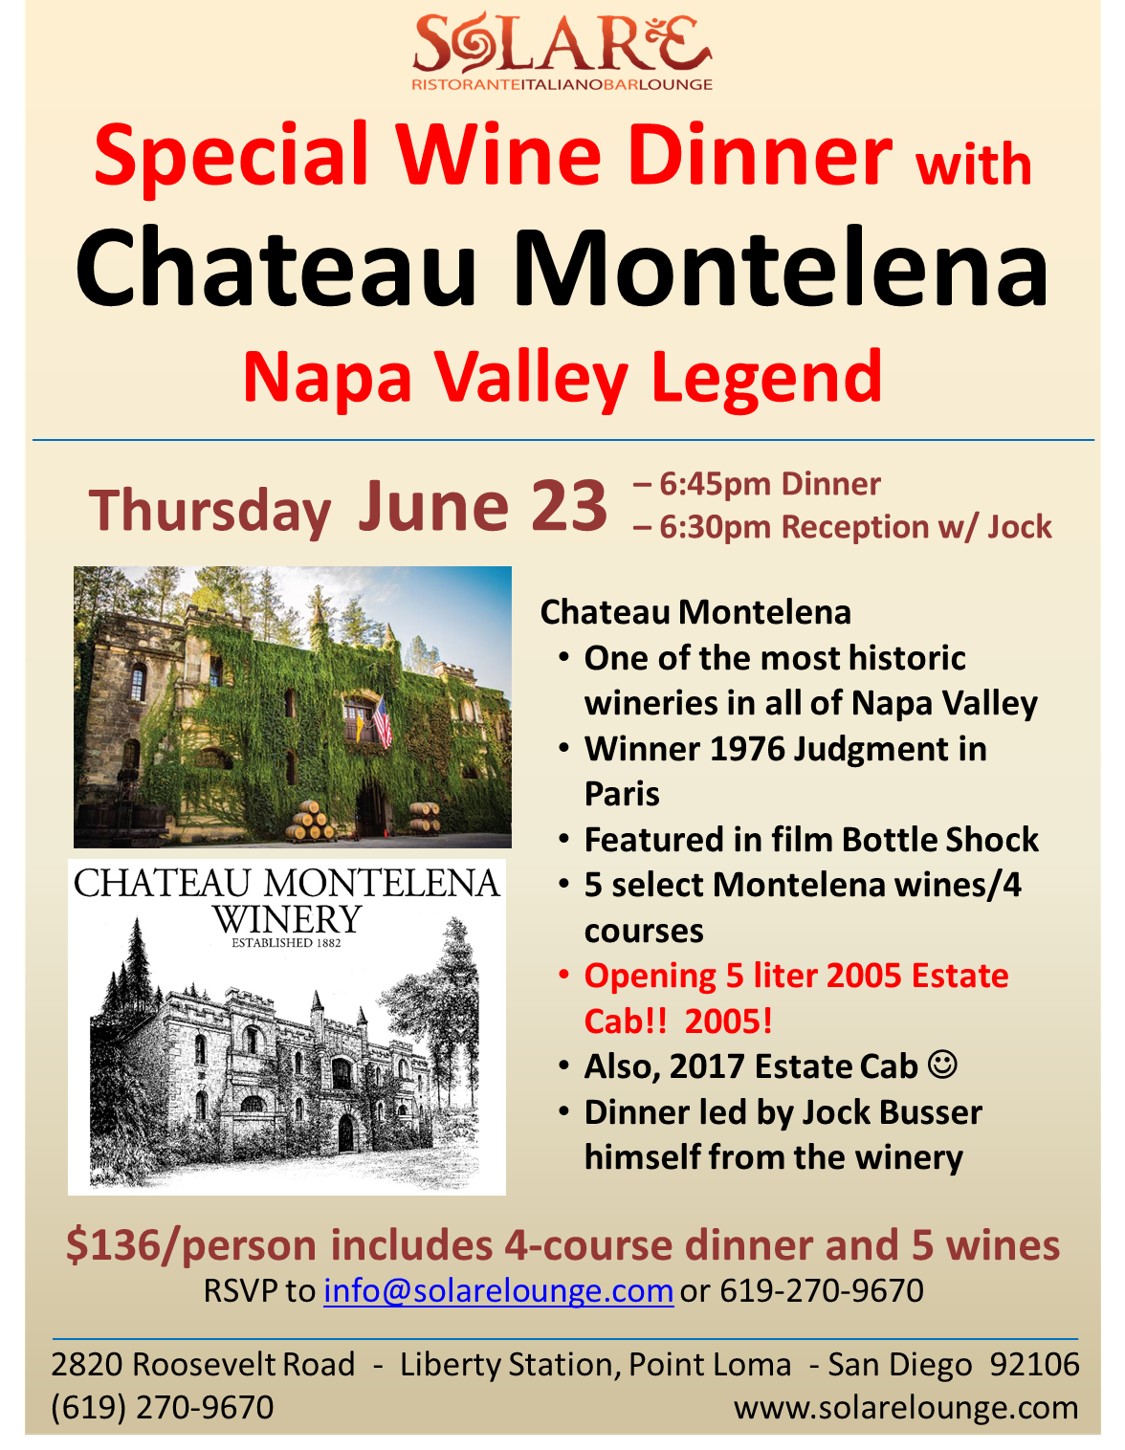 <a id="Solare-Chateau-Montelena-Dinner"></a>Solare Wine Dinner - Chateau Montelena - Napa Legend!